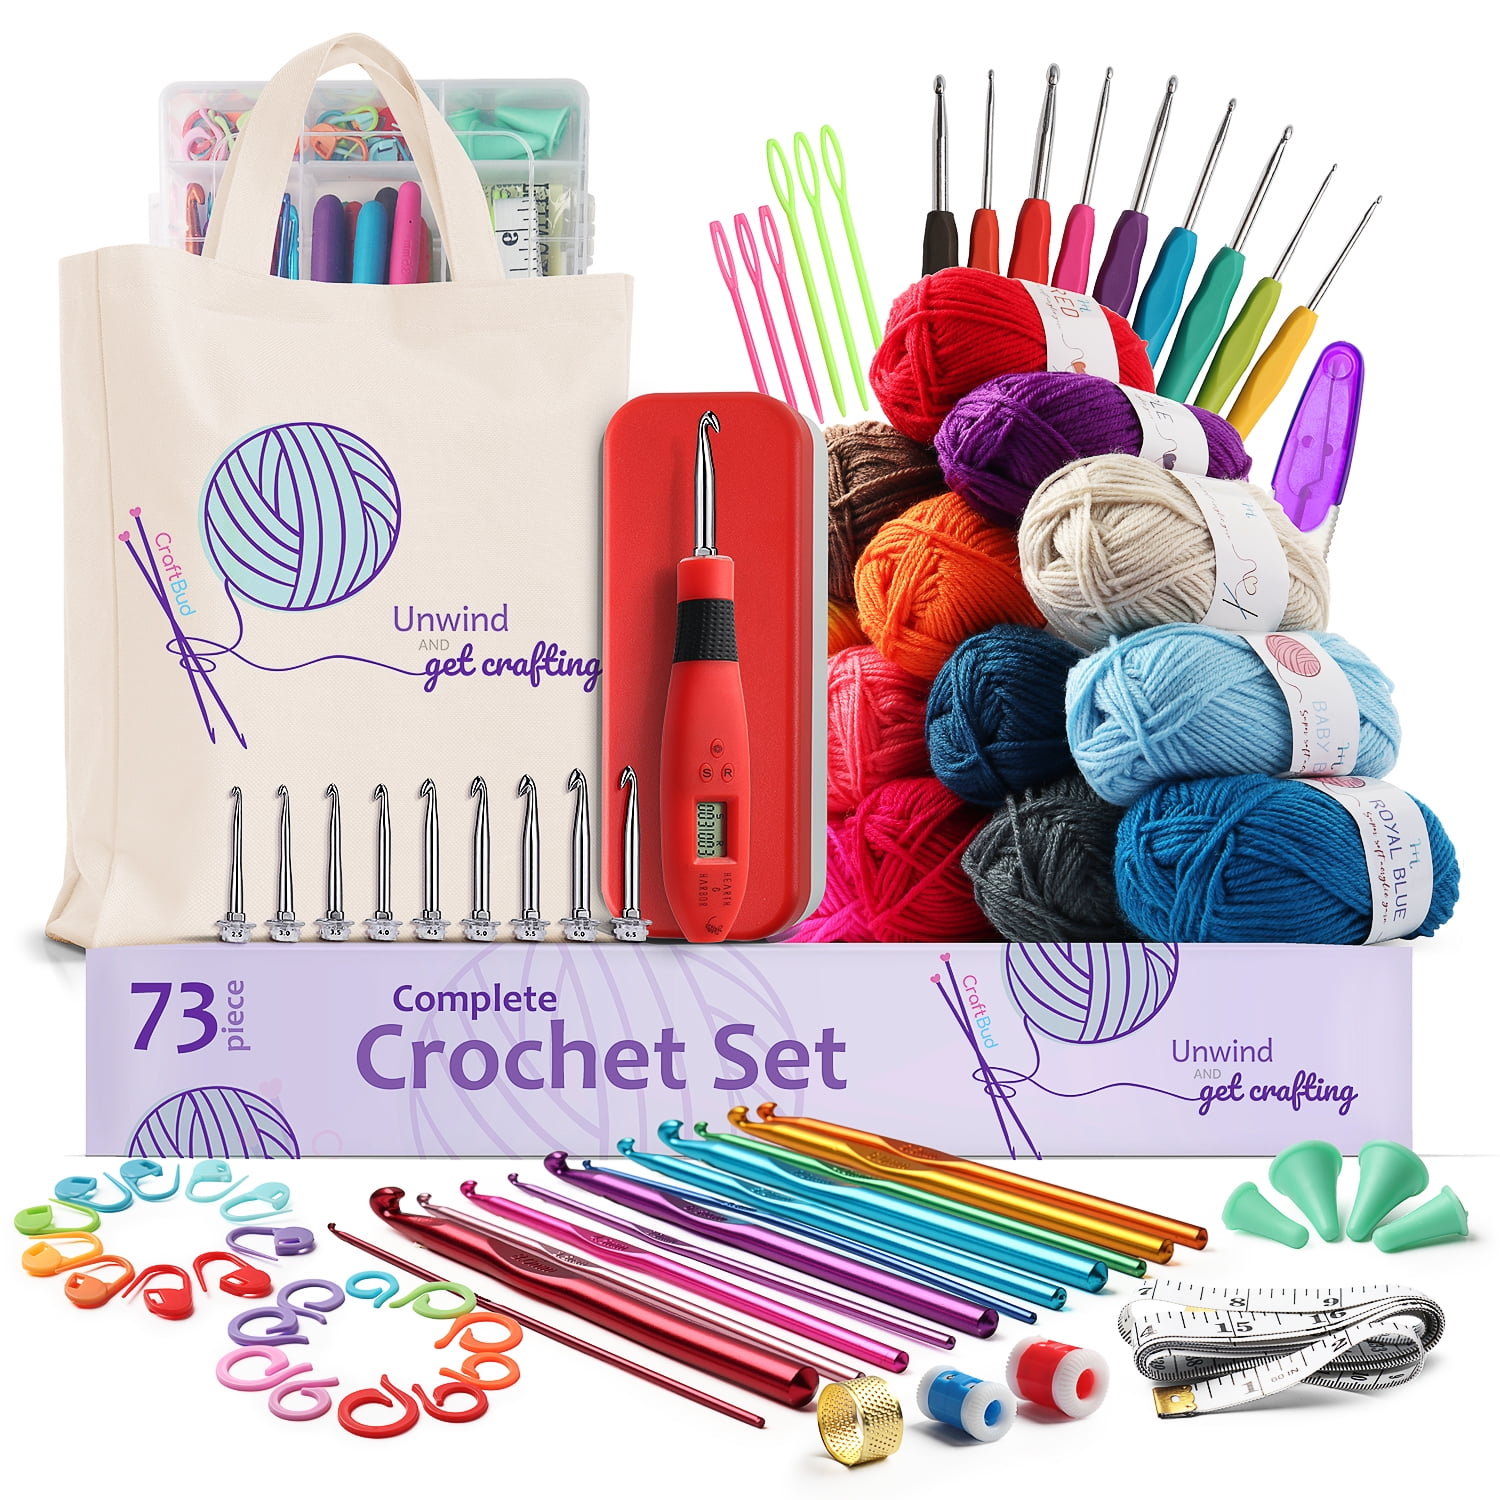 Craftbud Crochet Set Kit with Yarn and Crochet Hook Set (96pc), Size: Crochet Set + Crochet Counter